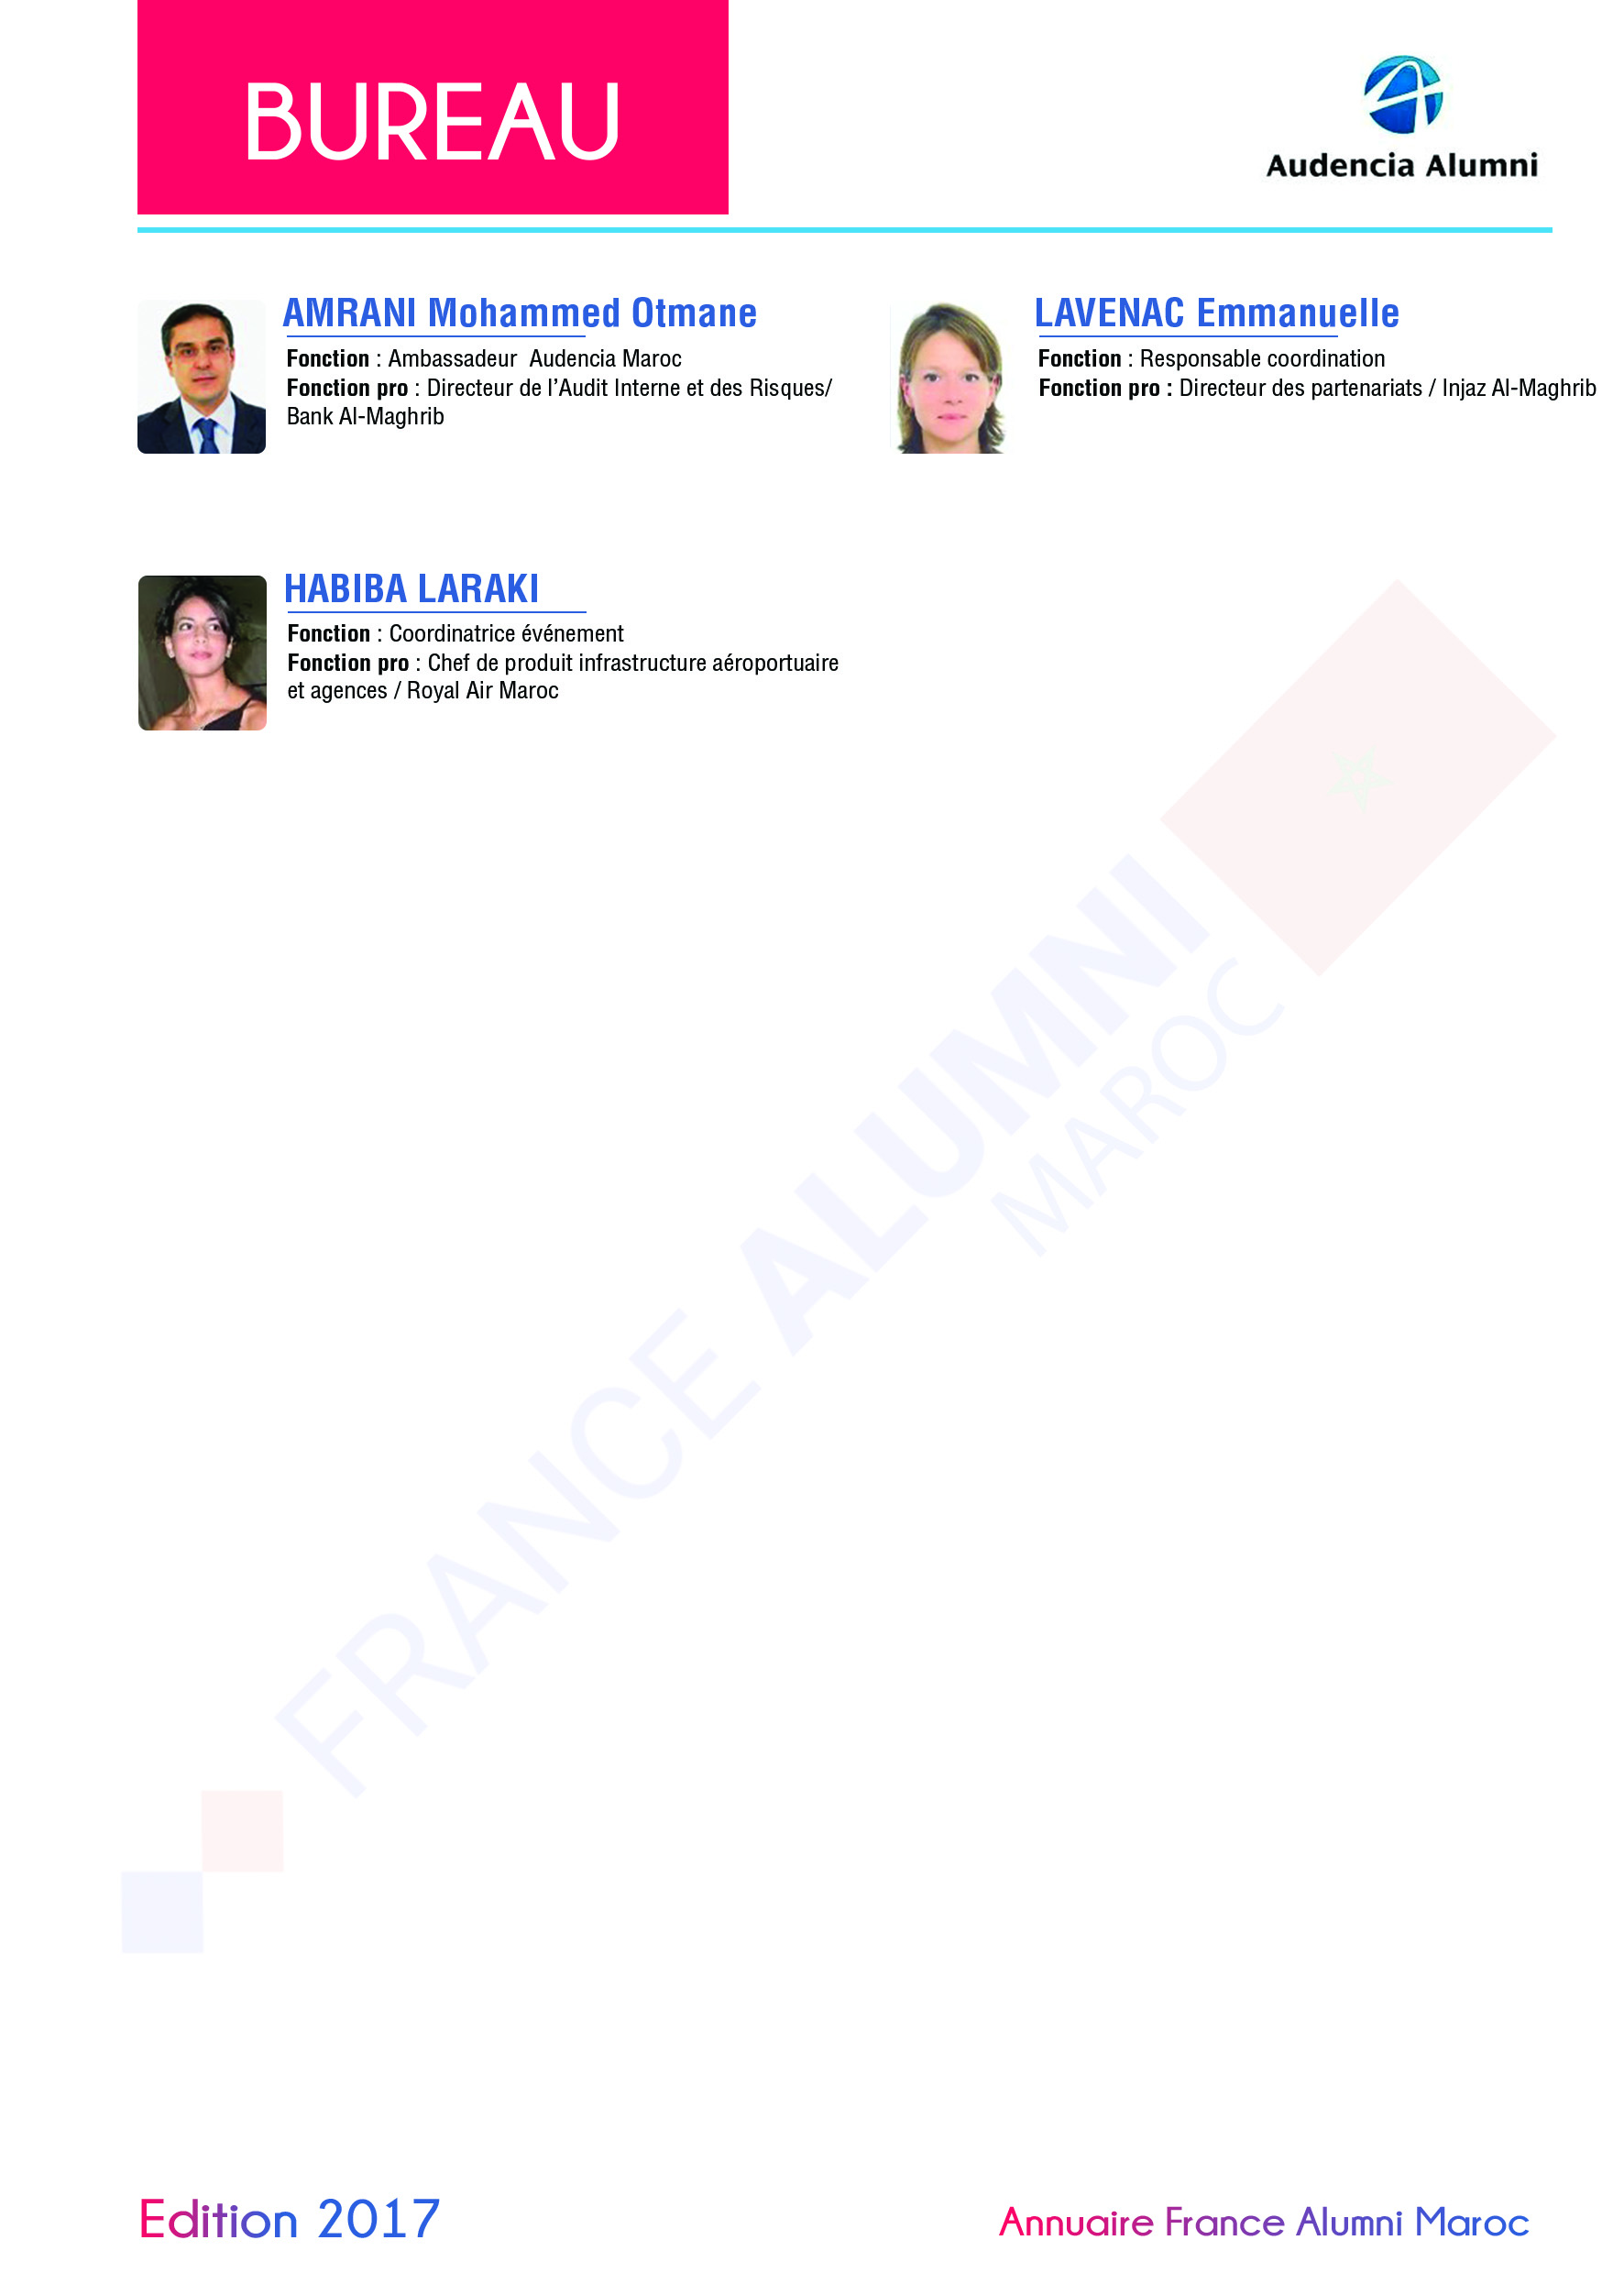 1512744973-audencia-bureau-annuaire-france-alumni.jpg